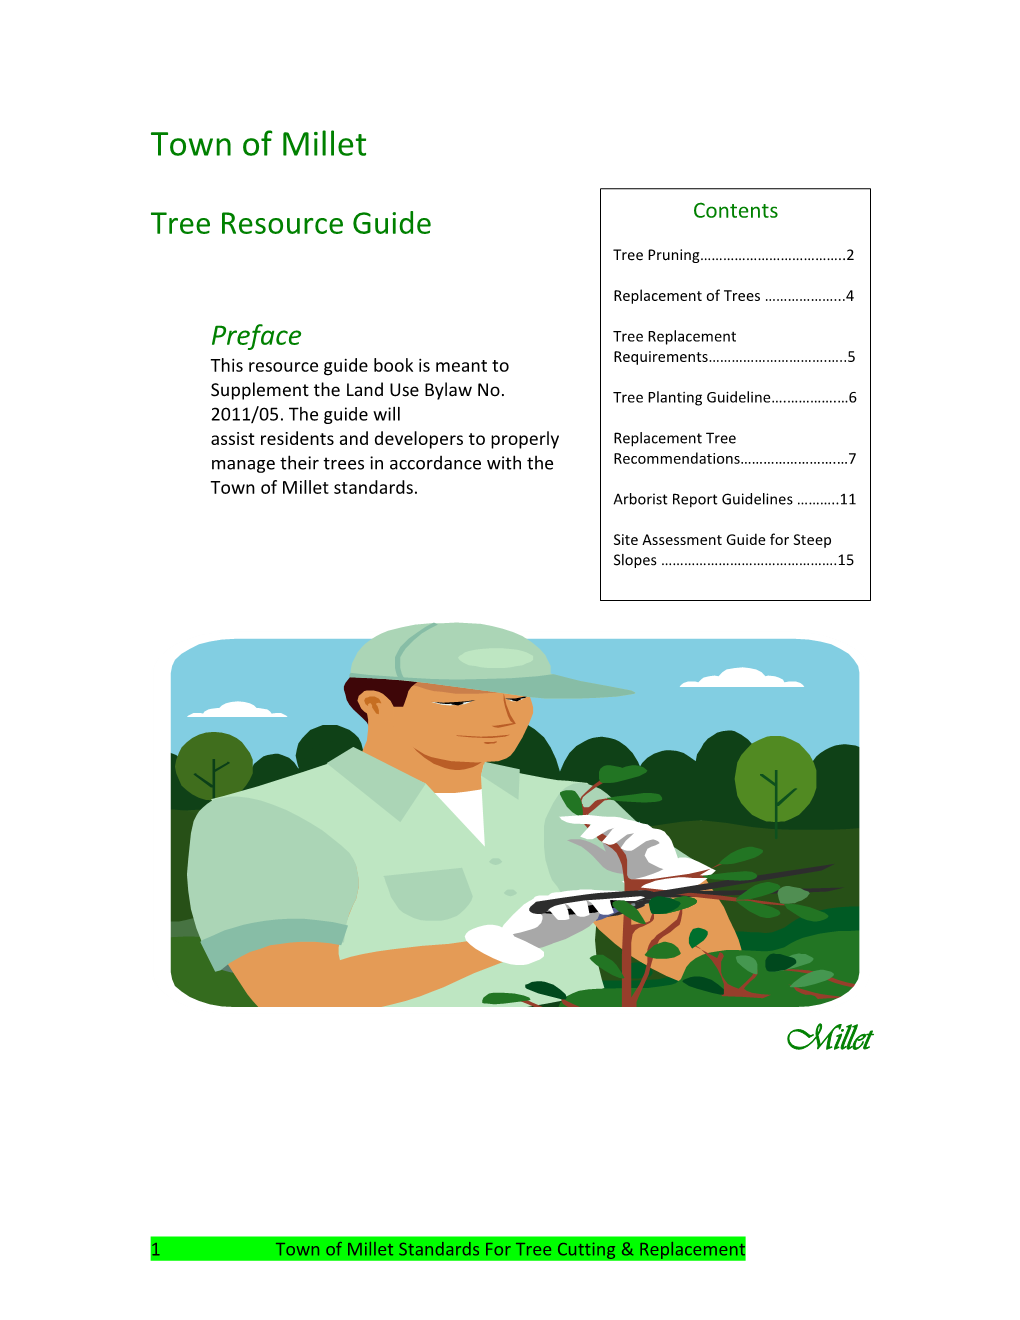 Tree Resource Guide Tree Pruning………………………………..2